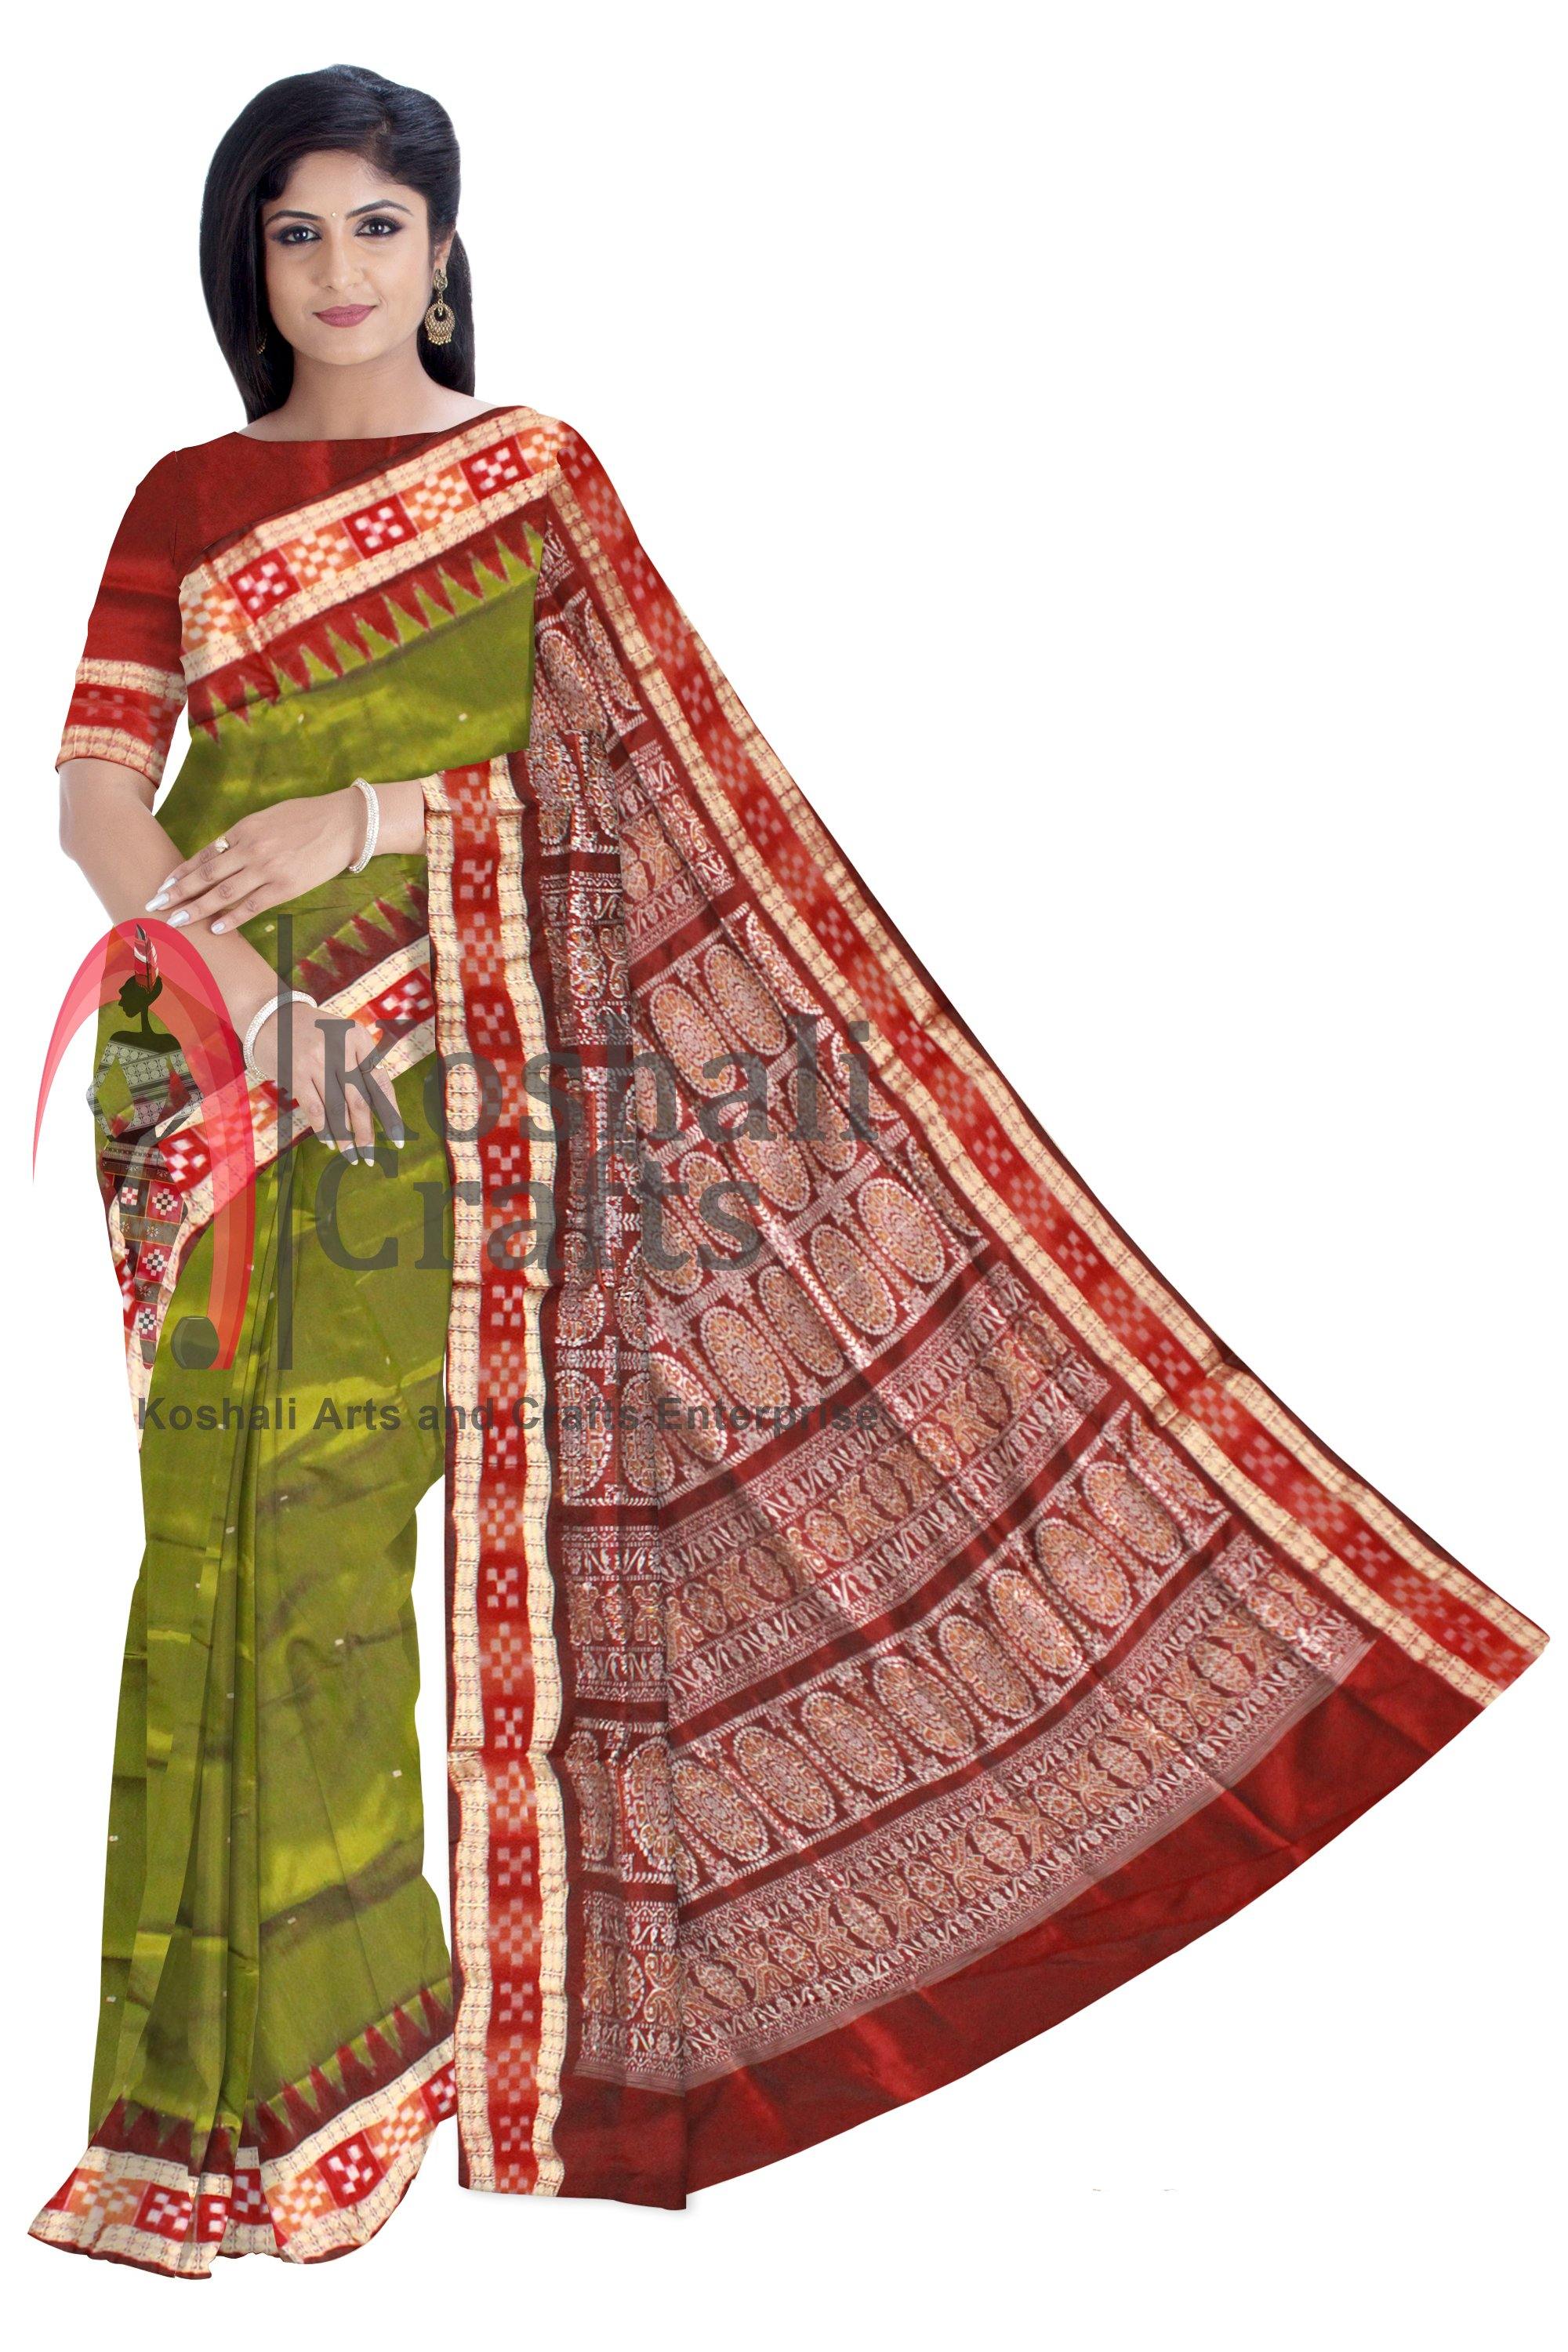 Green color buti pattern Sambalpuri pata saree with Pasapali border, Blouse piece available. - Koshali Arts & Crafts Enterprise